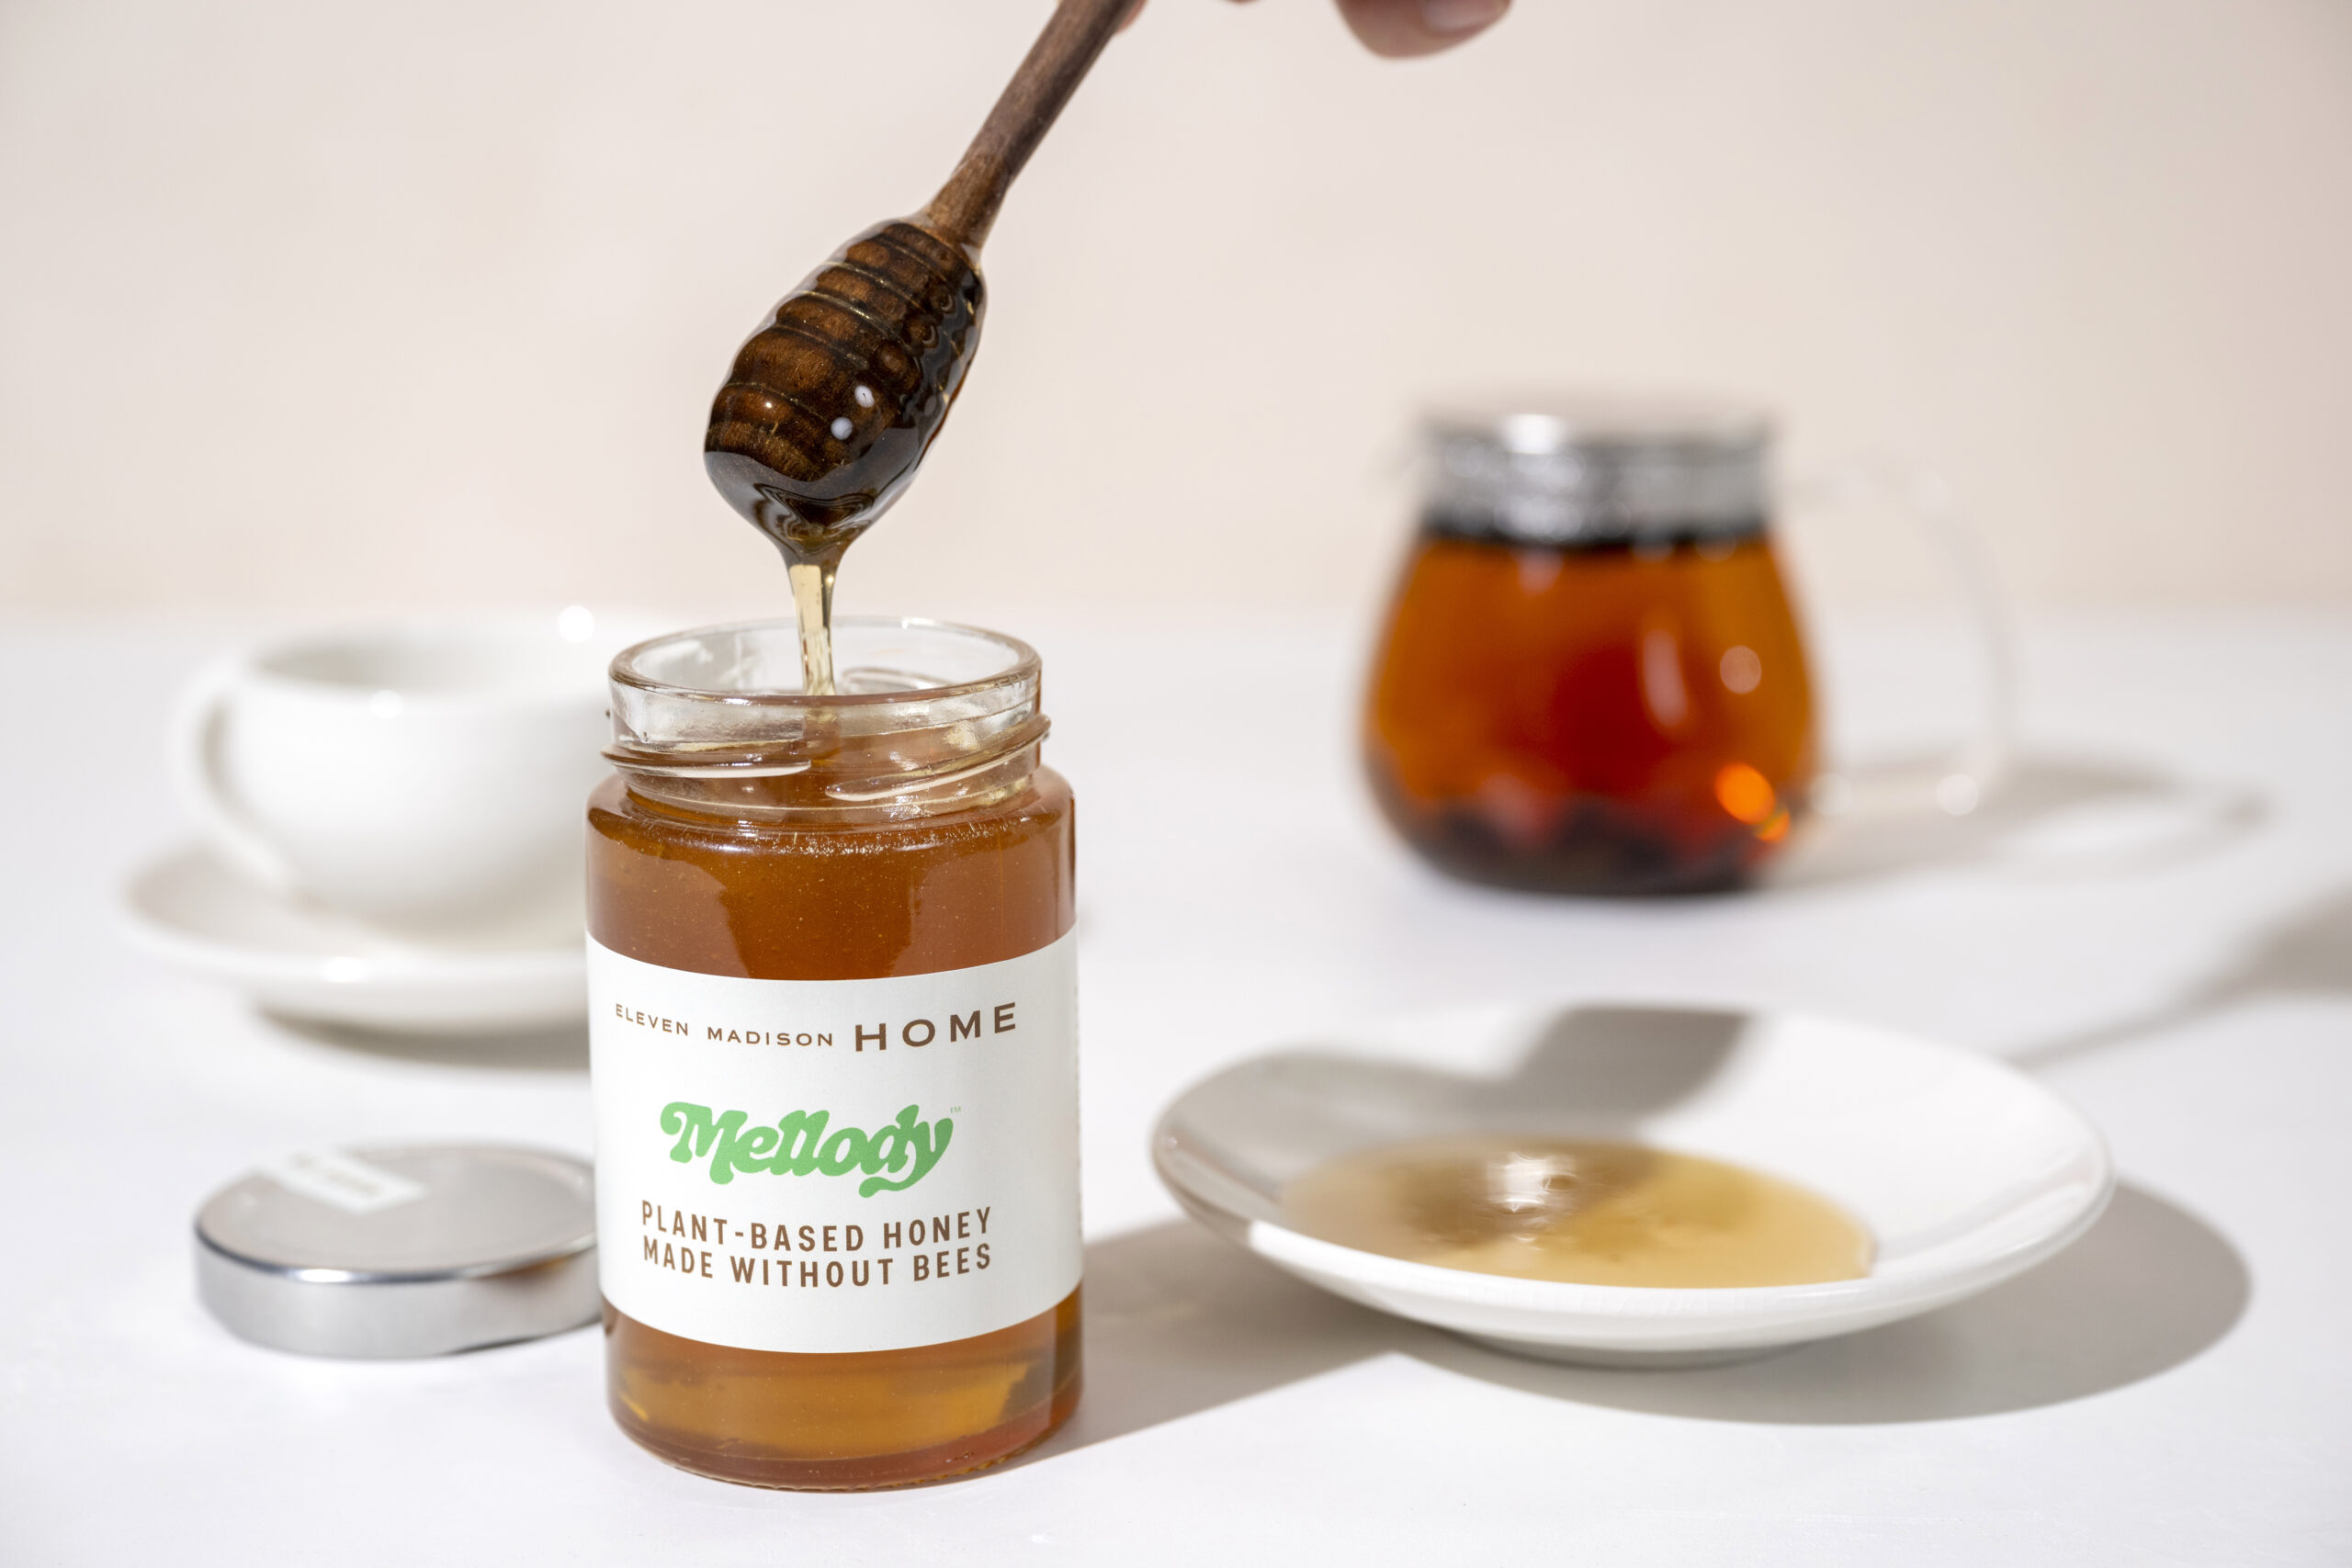 Lehigh Valley: Curious about Plant-Based Honey Taste? Mellody’s Darko Mandich reveals the Surprise